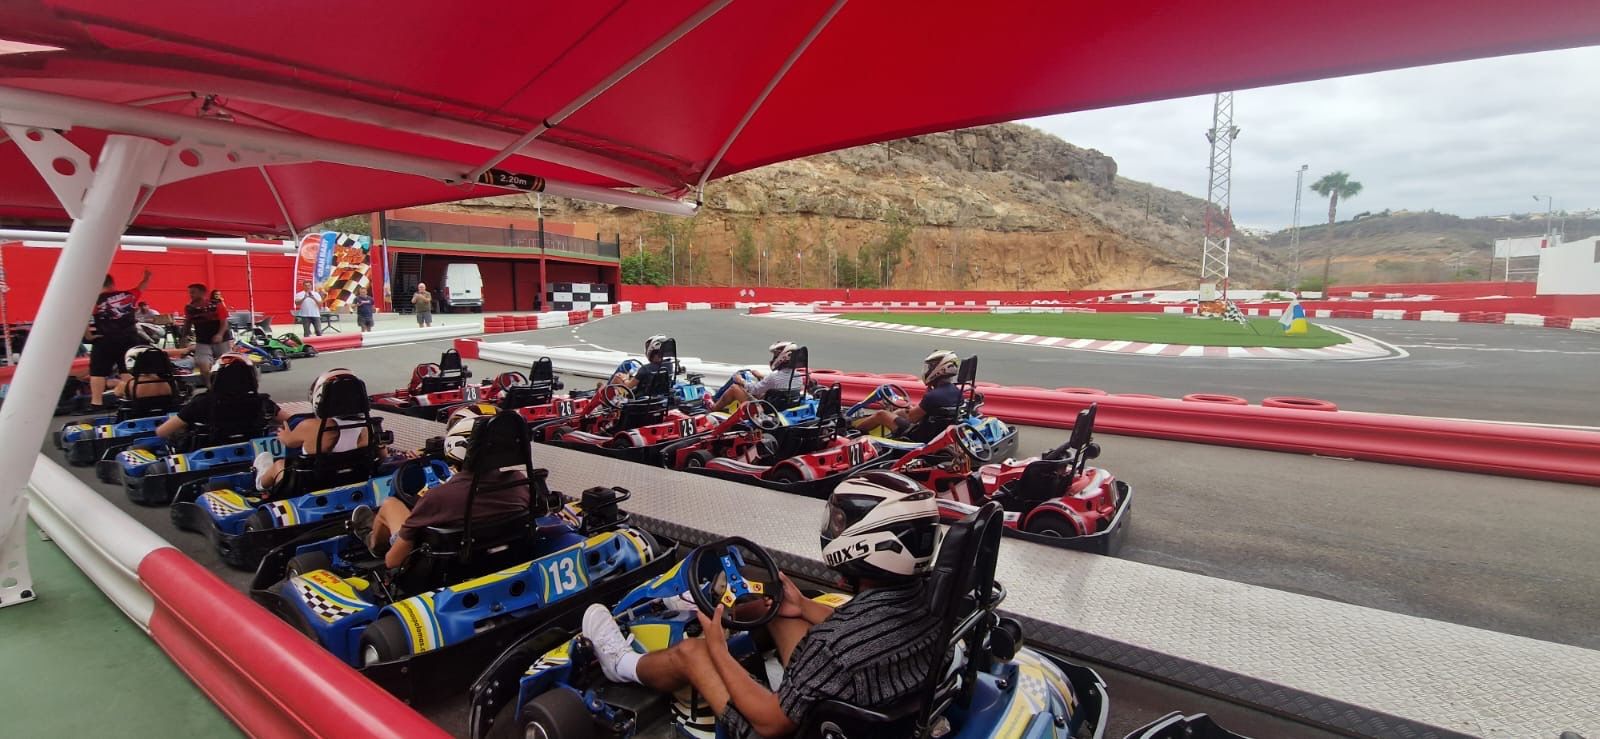 Red Itevelesa celebra el evento “The Gran Kart” en Gran Canaria